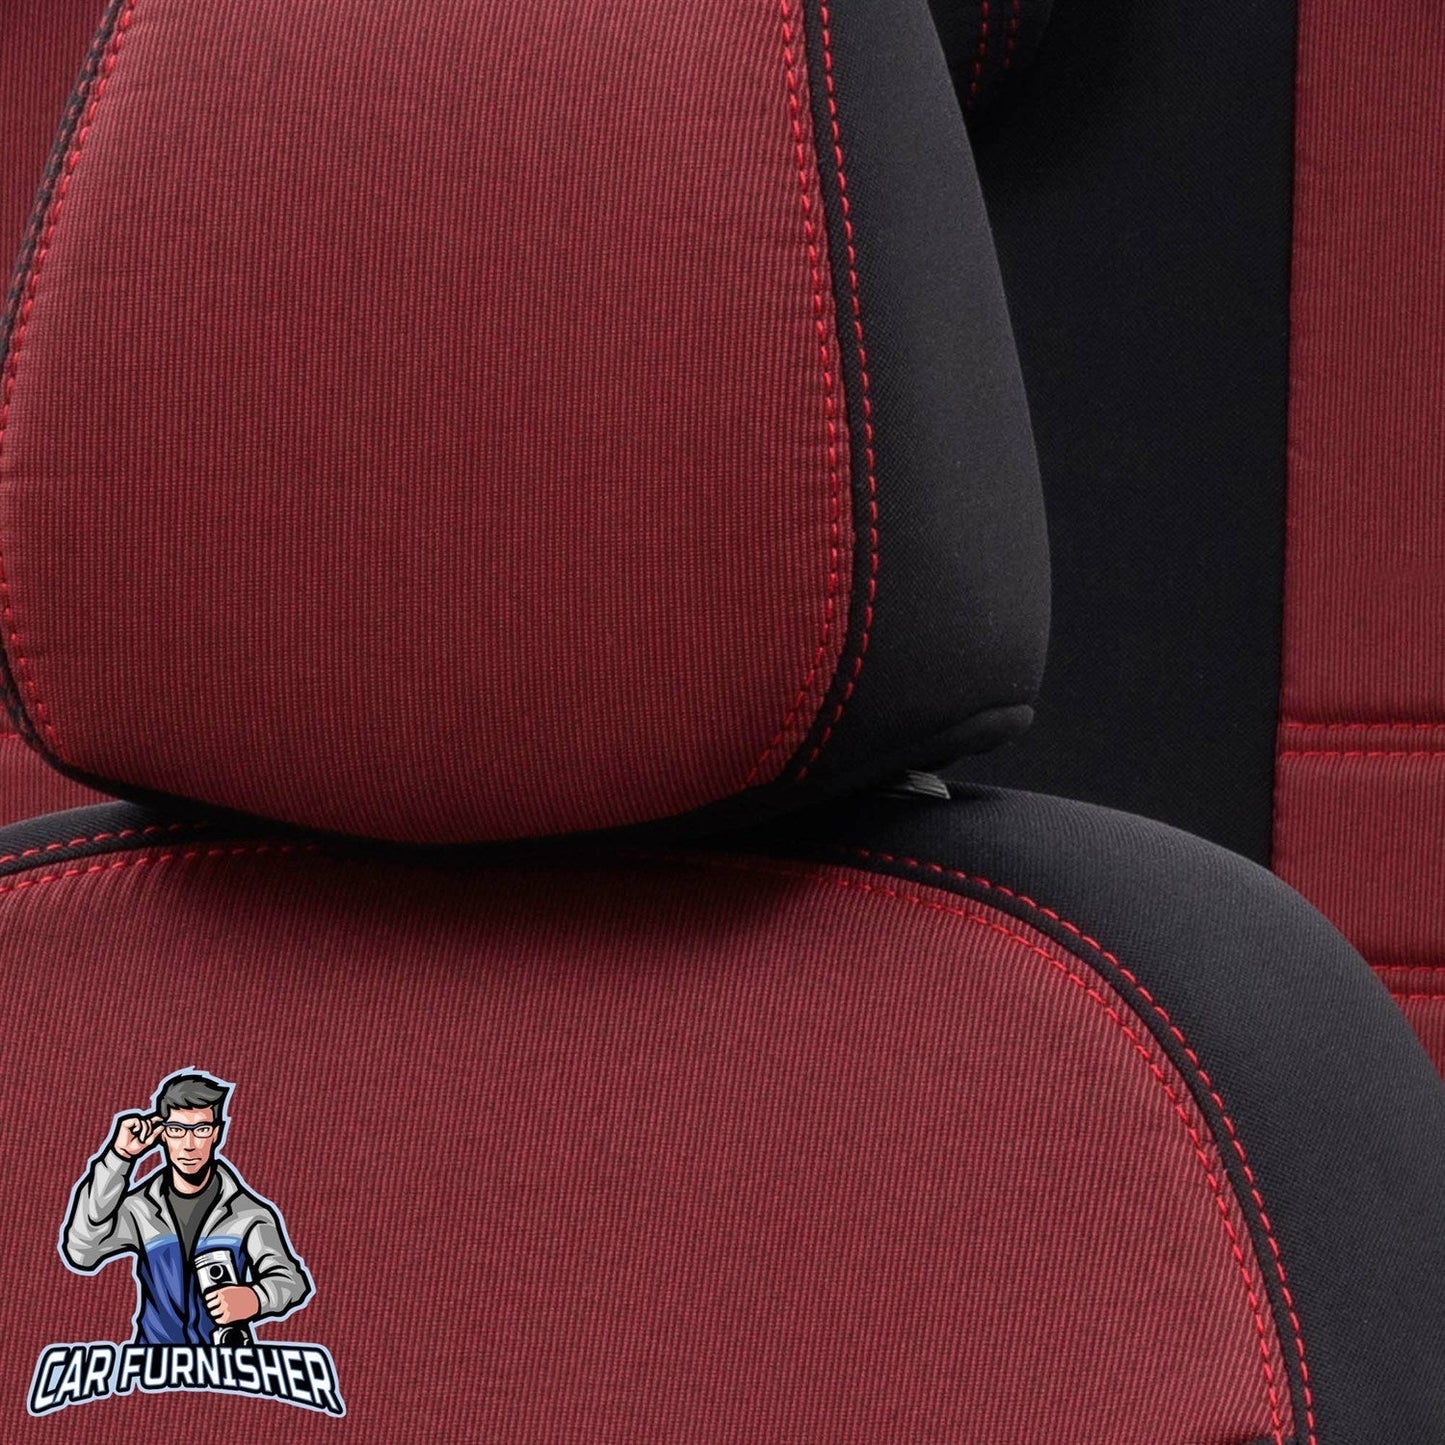 Bmw 1 Series Seat Cover Original Jacquard Design Red Jacquard Fabric